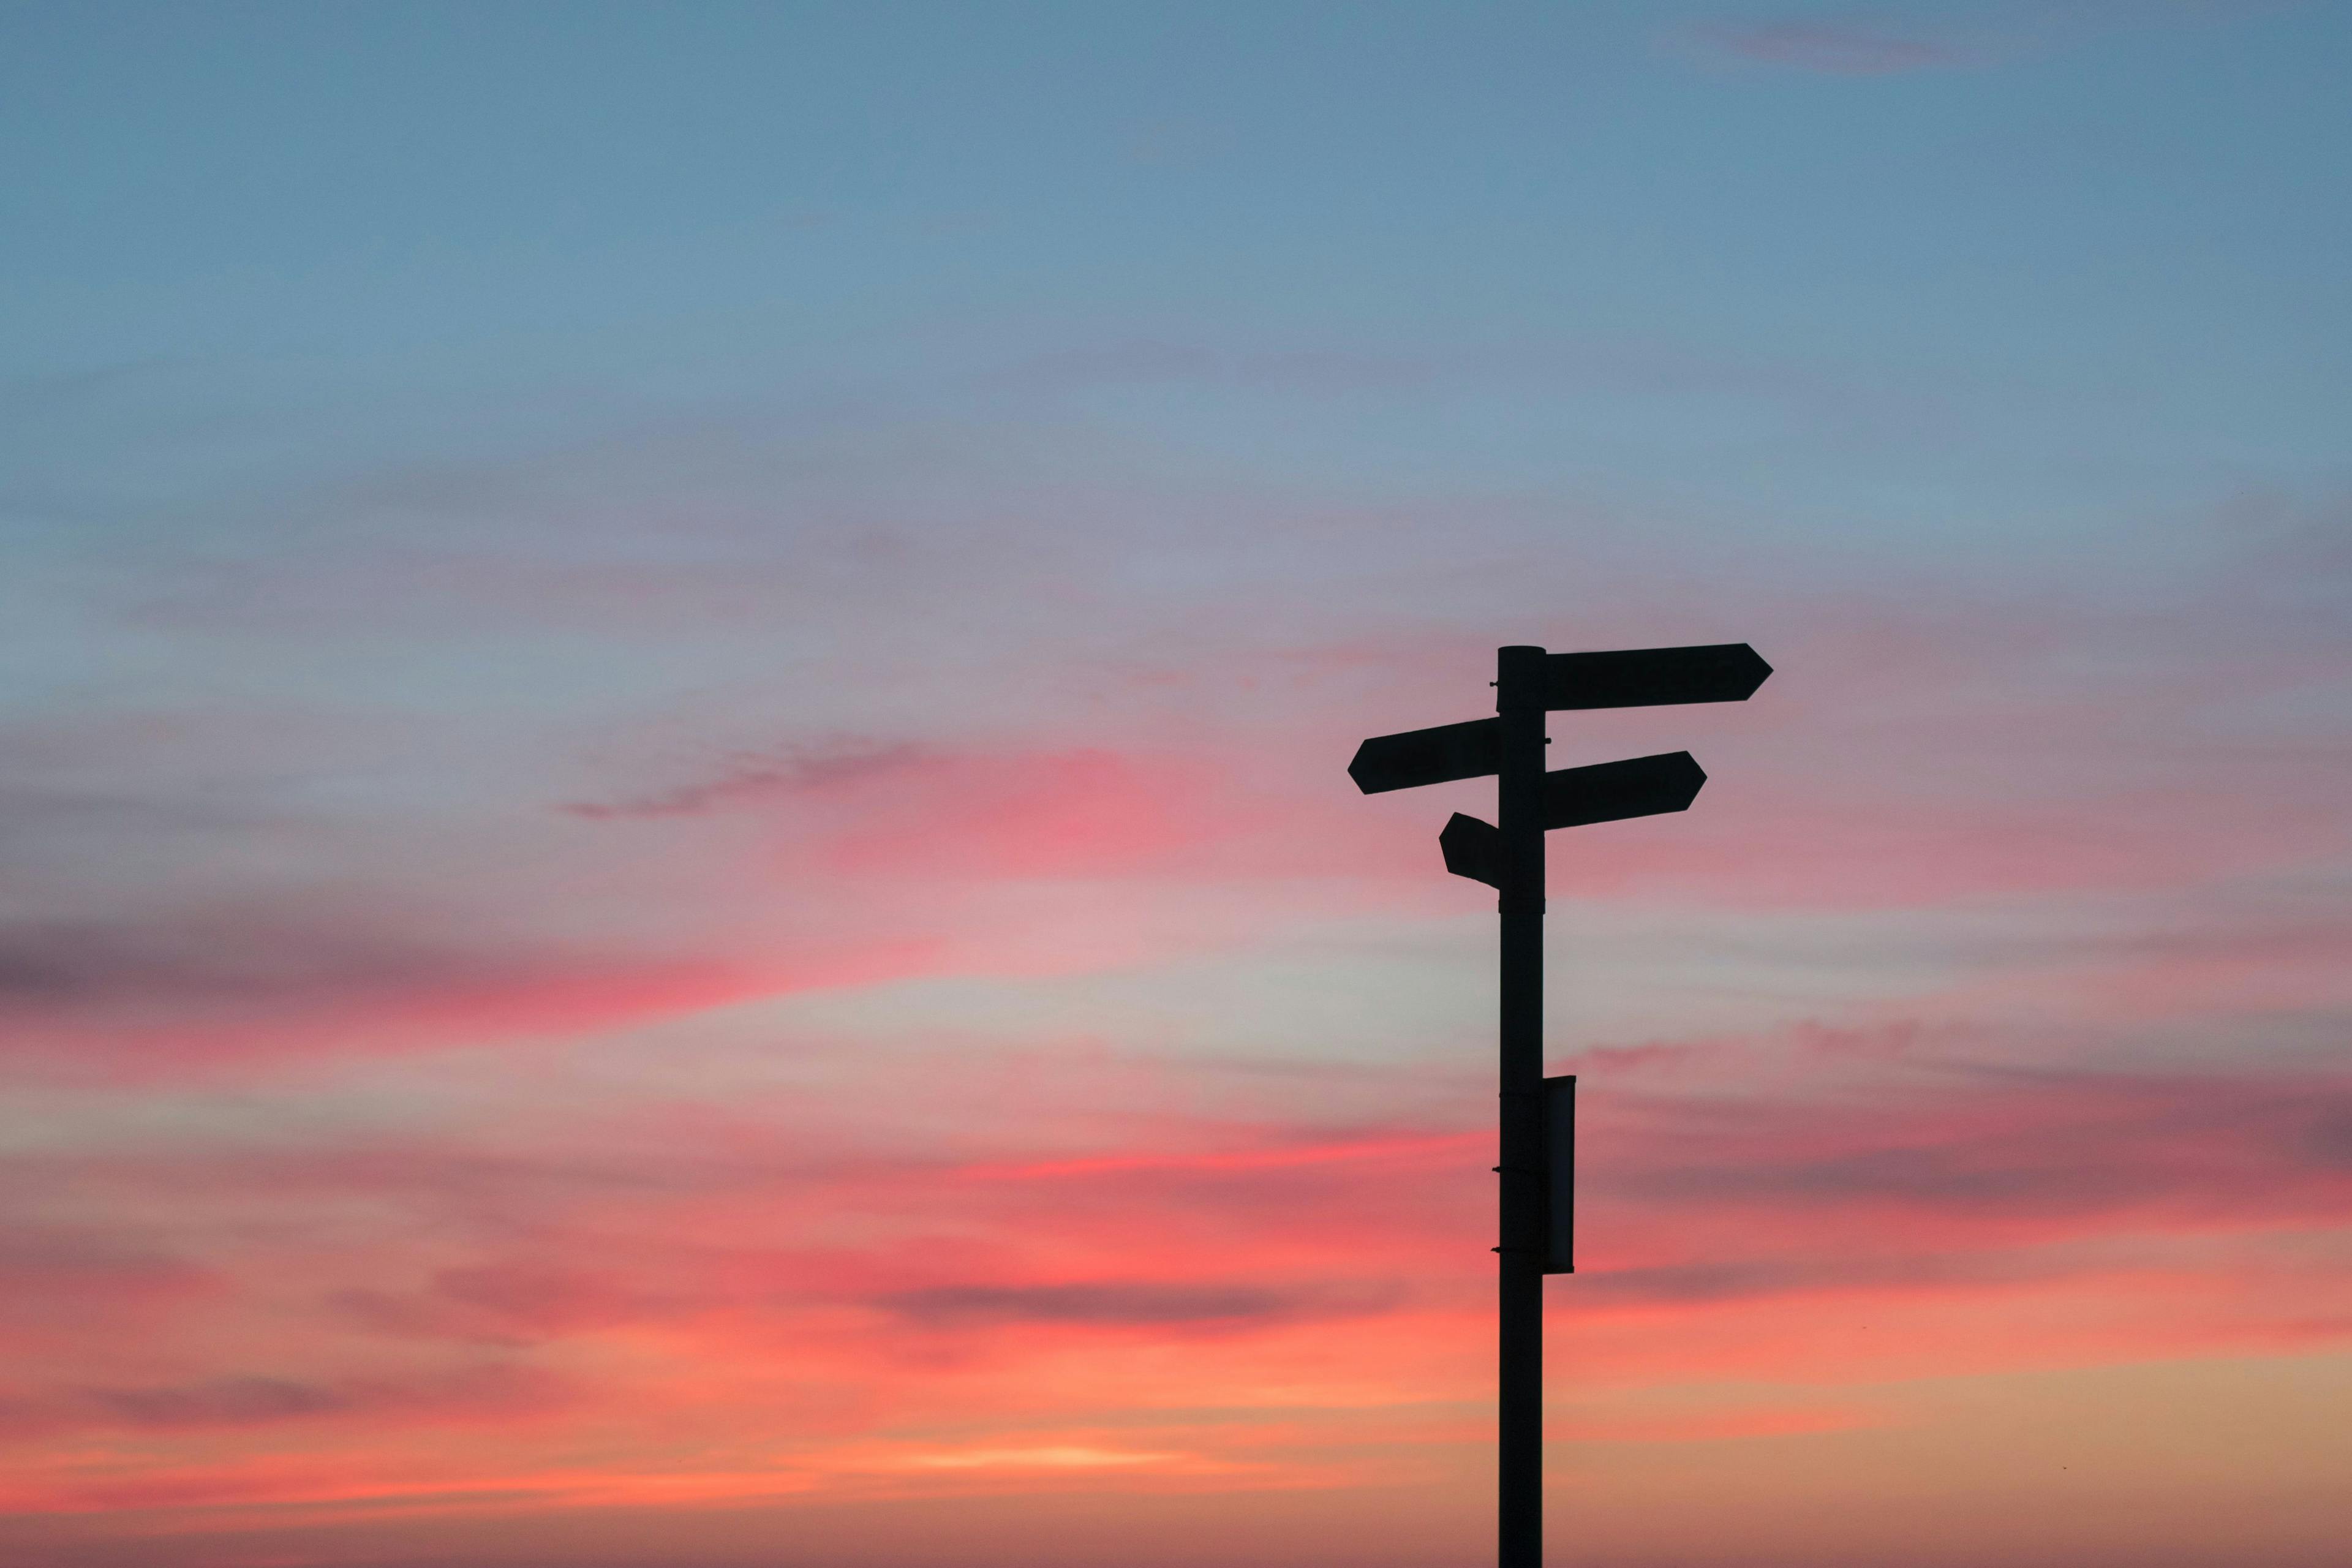 Single signpost set against a sunset sky